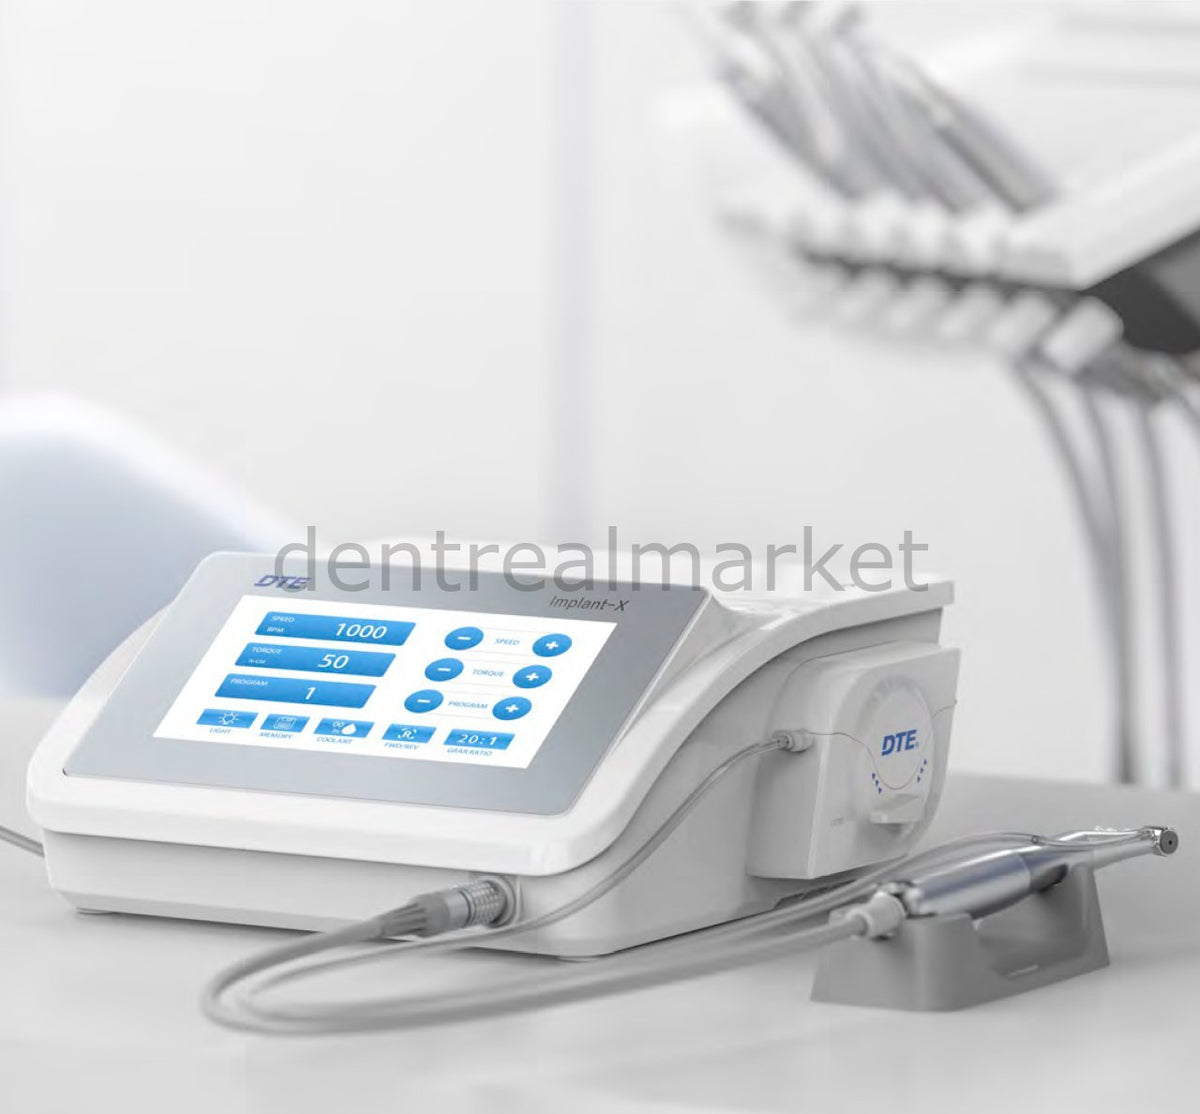 DentrealStore - Woodpecker Dte Implant-X Implant Motor - Dental Physiodispenser